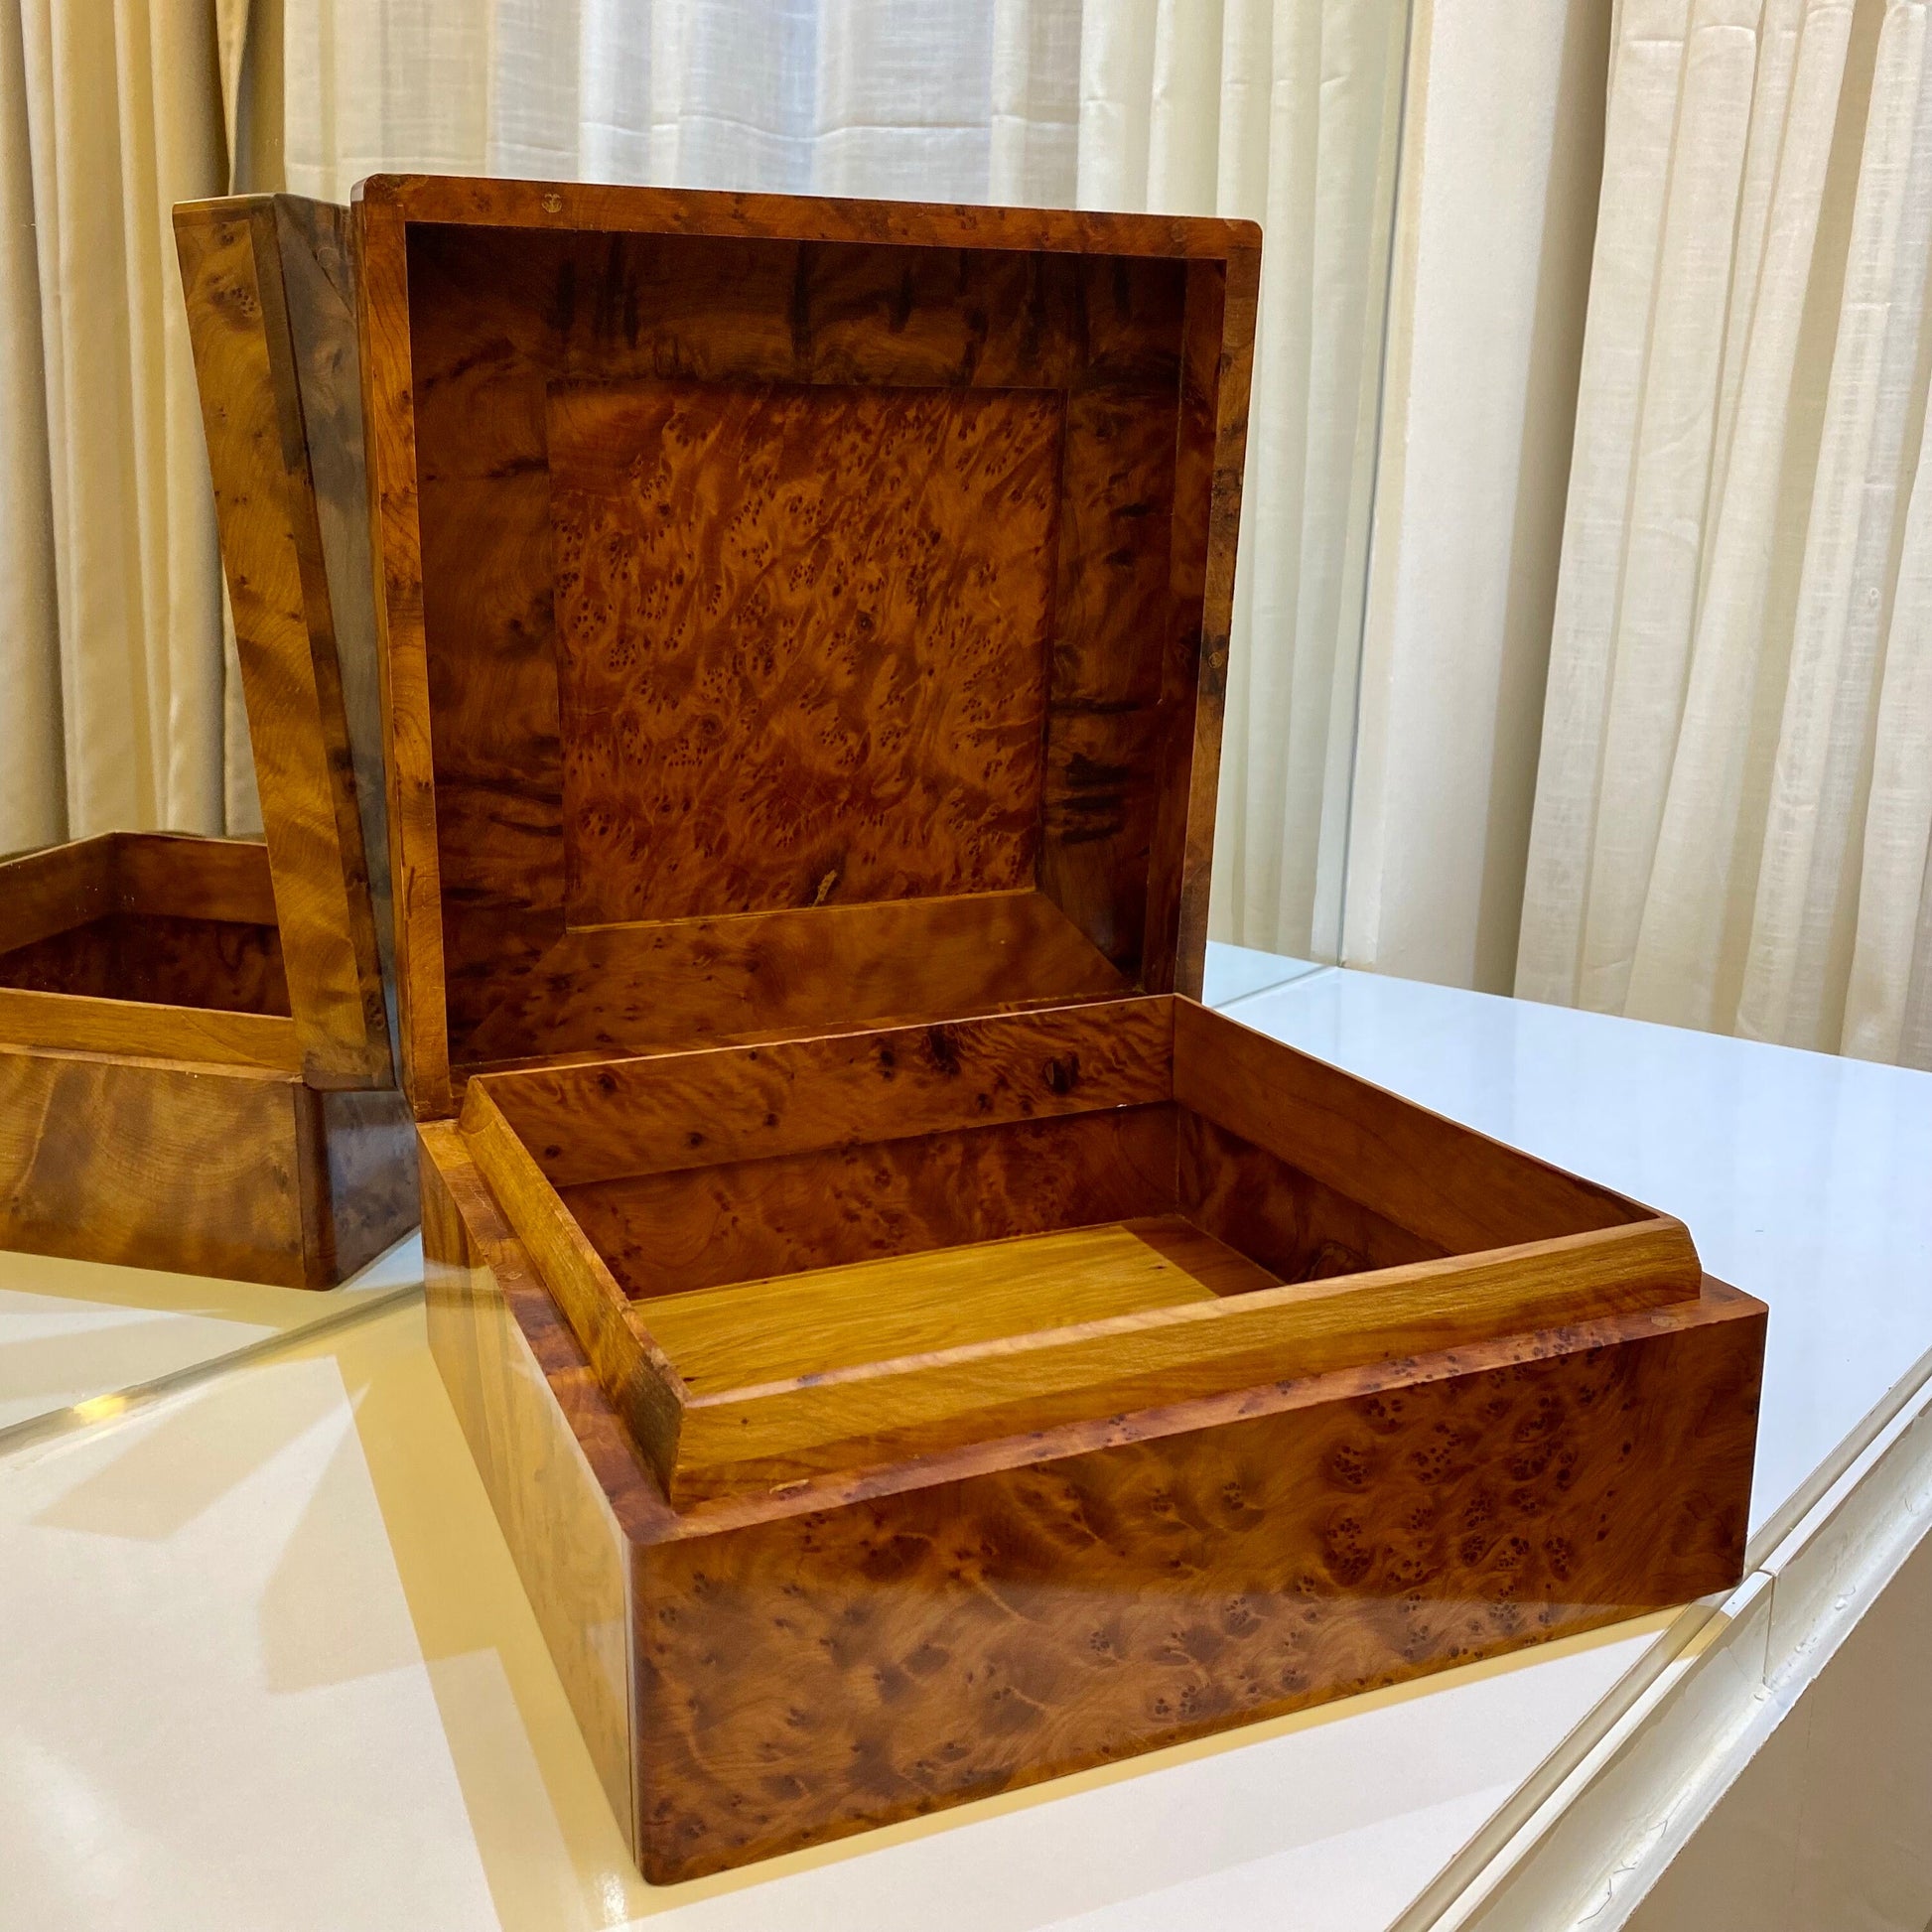 11"x11" Moroccan Exquisite Thuya Wood Luxury jewellery burl Box,no lockable wooden keepsake Box ,keepsake couple's memory gift box